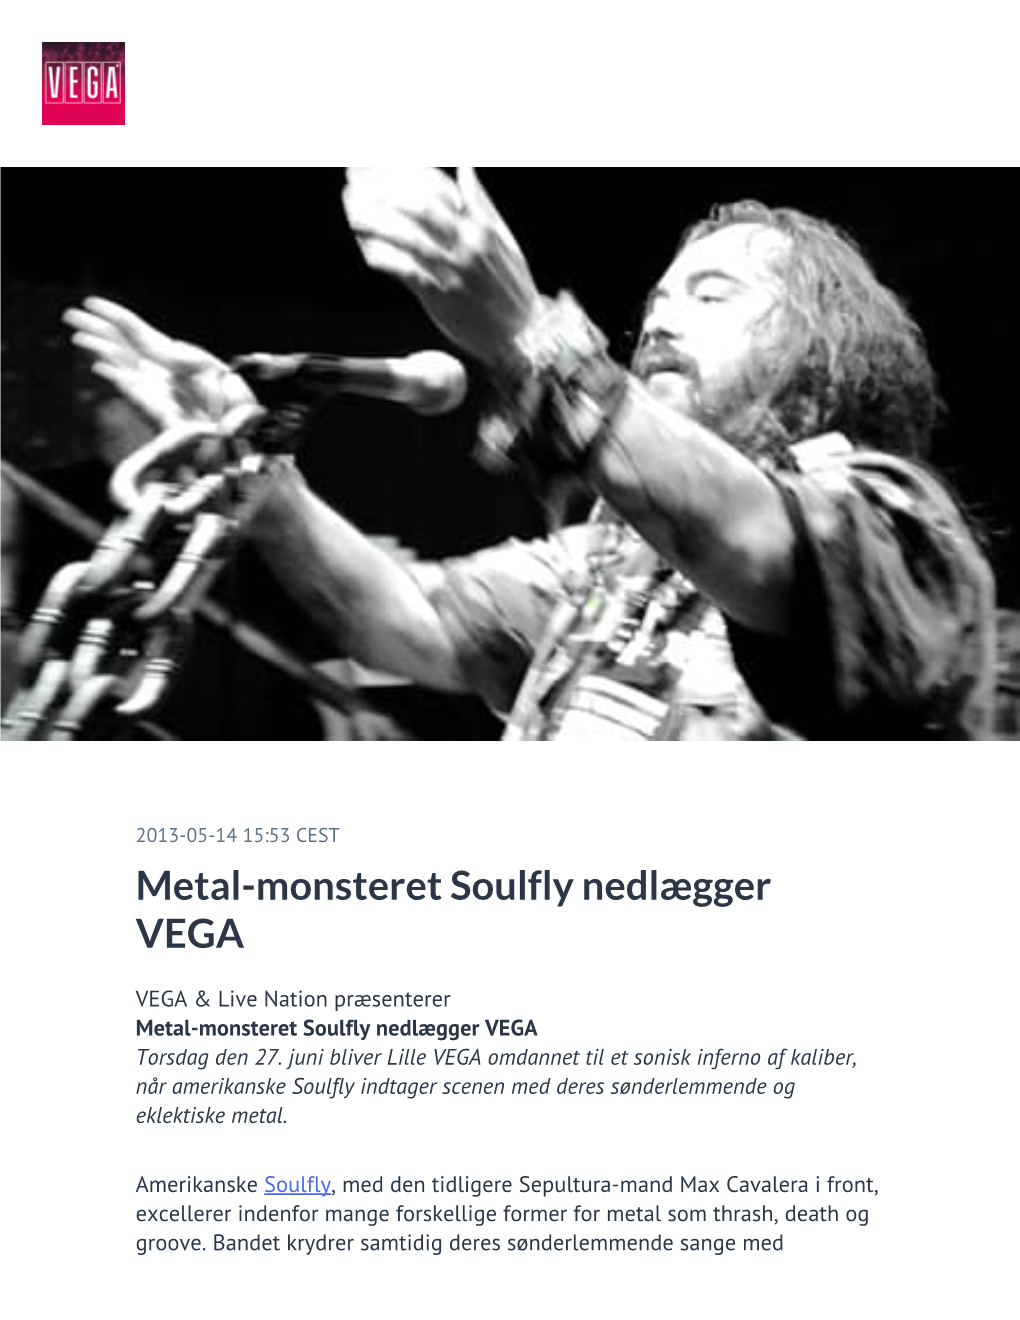 Metal-Monsteret Soulfly Nedlægger VEGA